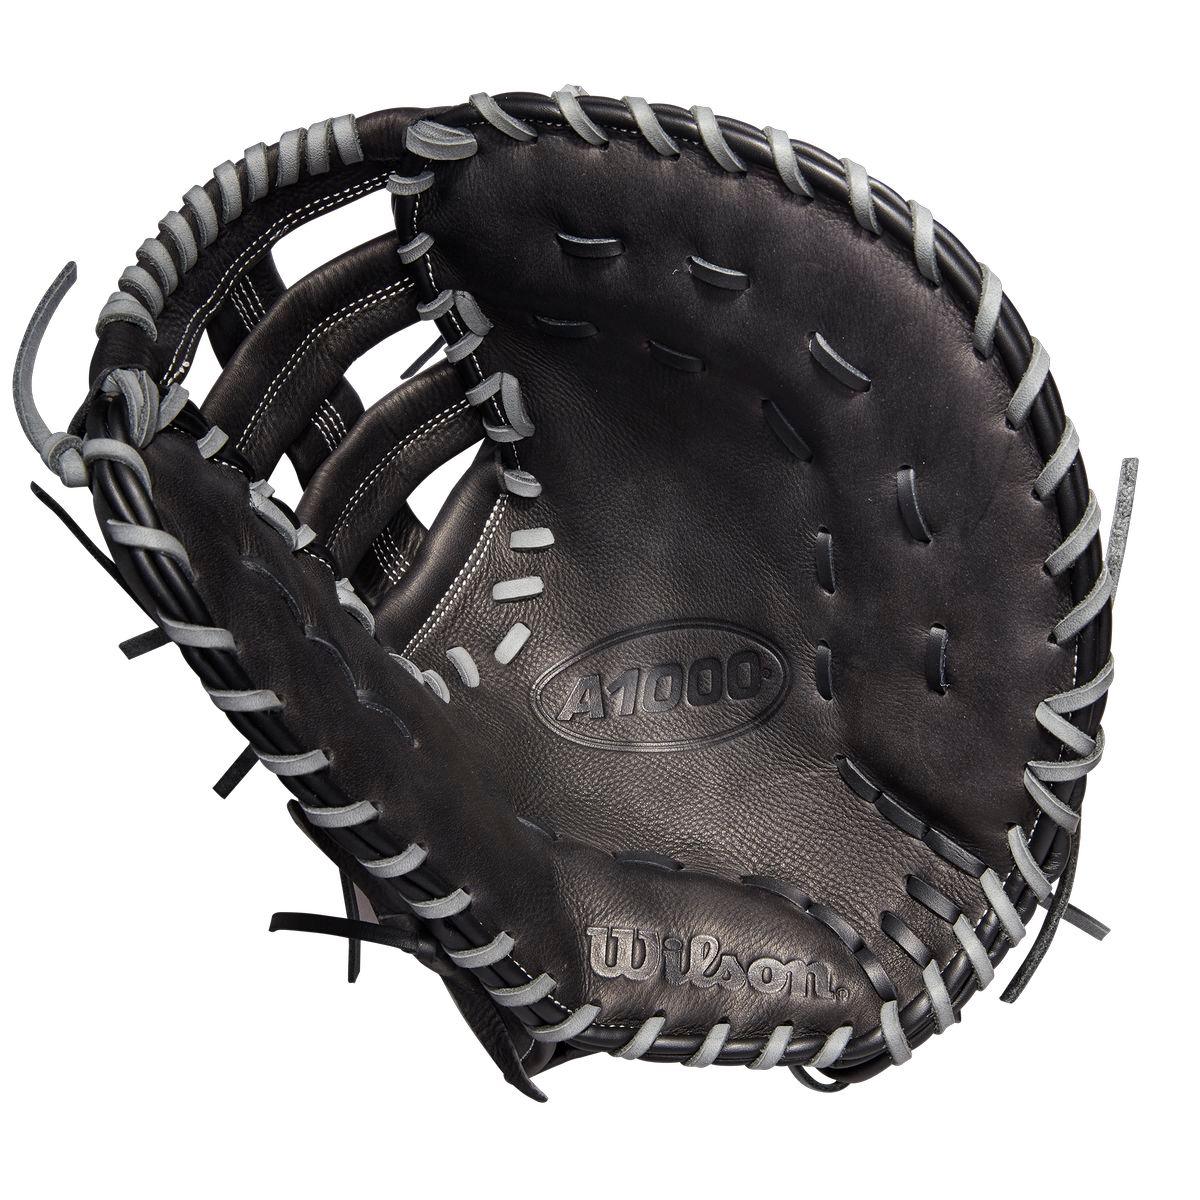 A1000 1620 12.5" Senior Baseball Glove - Sports Excellence